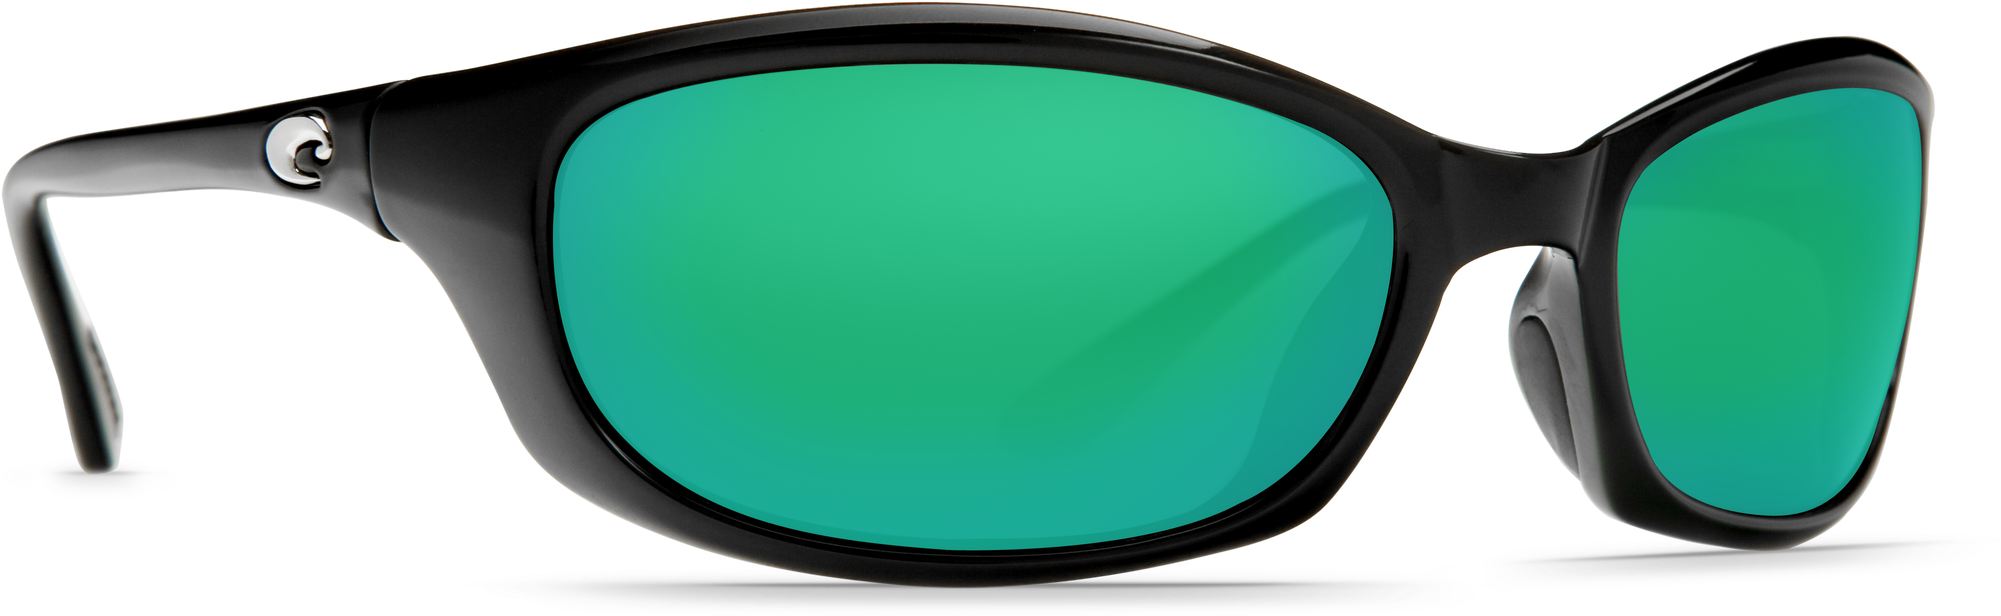 Costa Del Mar Harpoon Sunglasses In Shiny Black, Tr-90 - Costa Del Mar Harpoon Shiny Black Sunglasses Green (2000x1000), Png Download